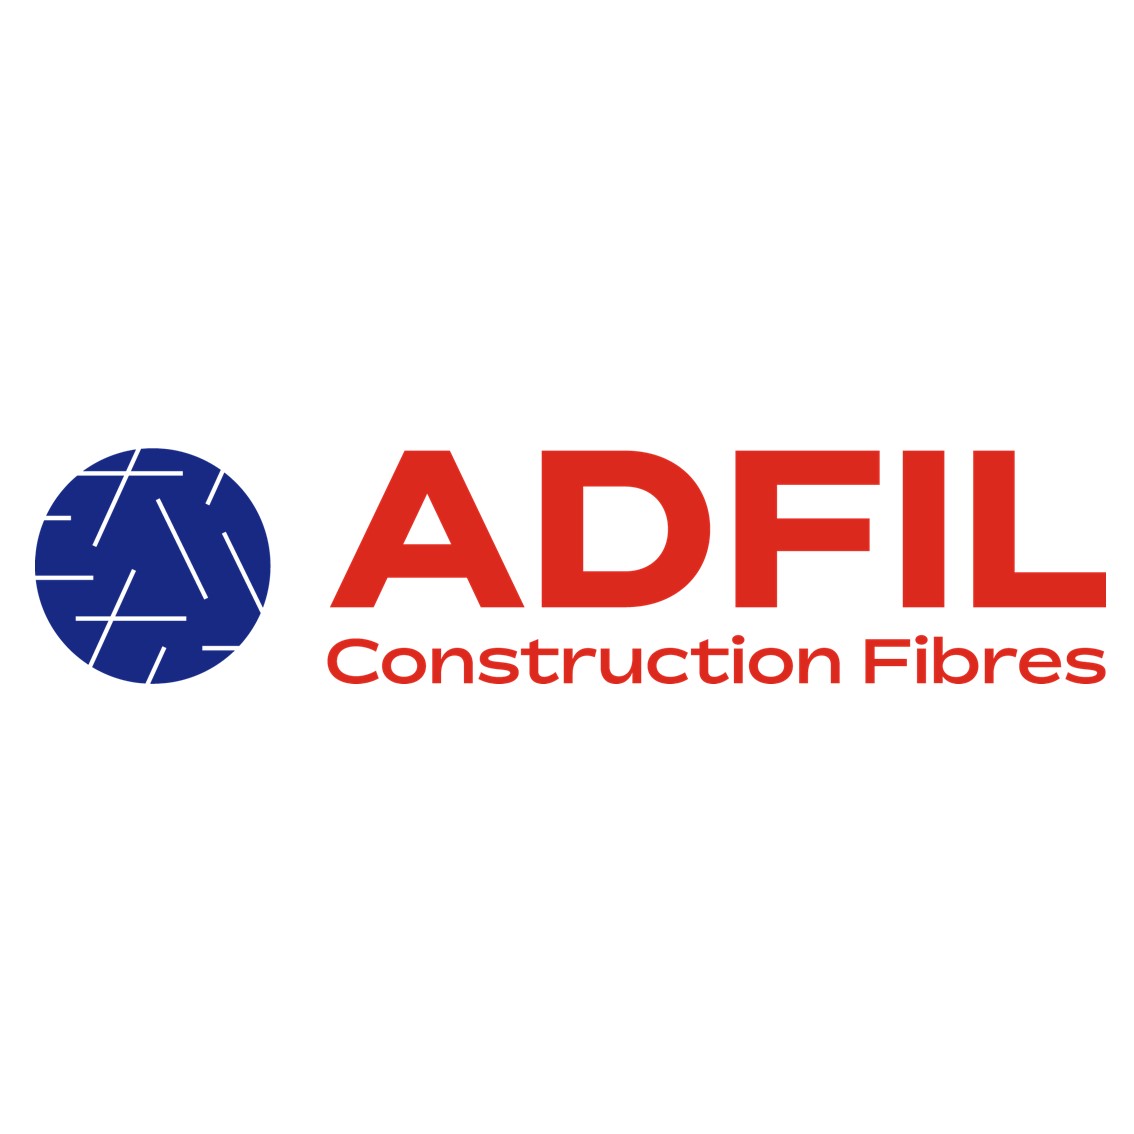 ADFIL Color Logo With Tagline